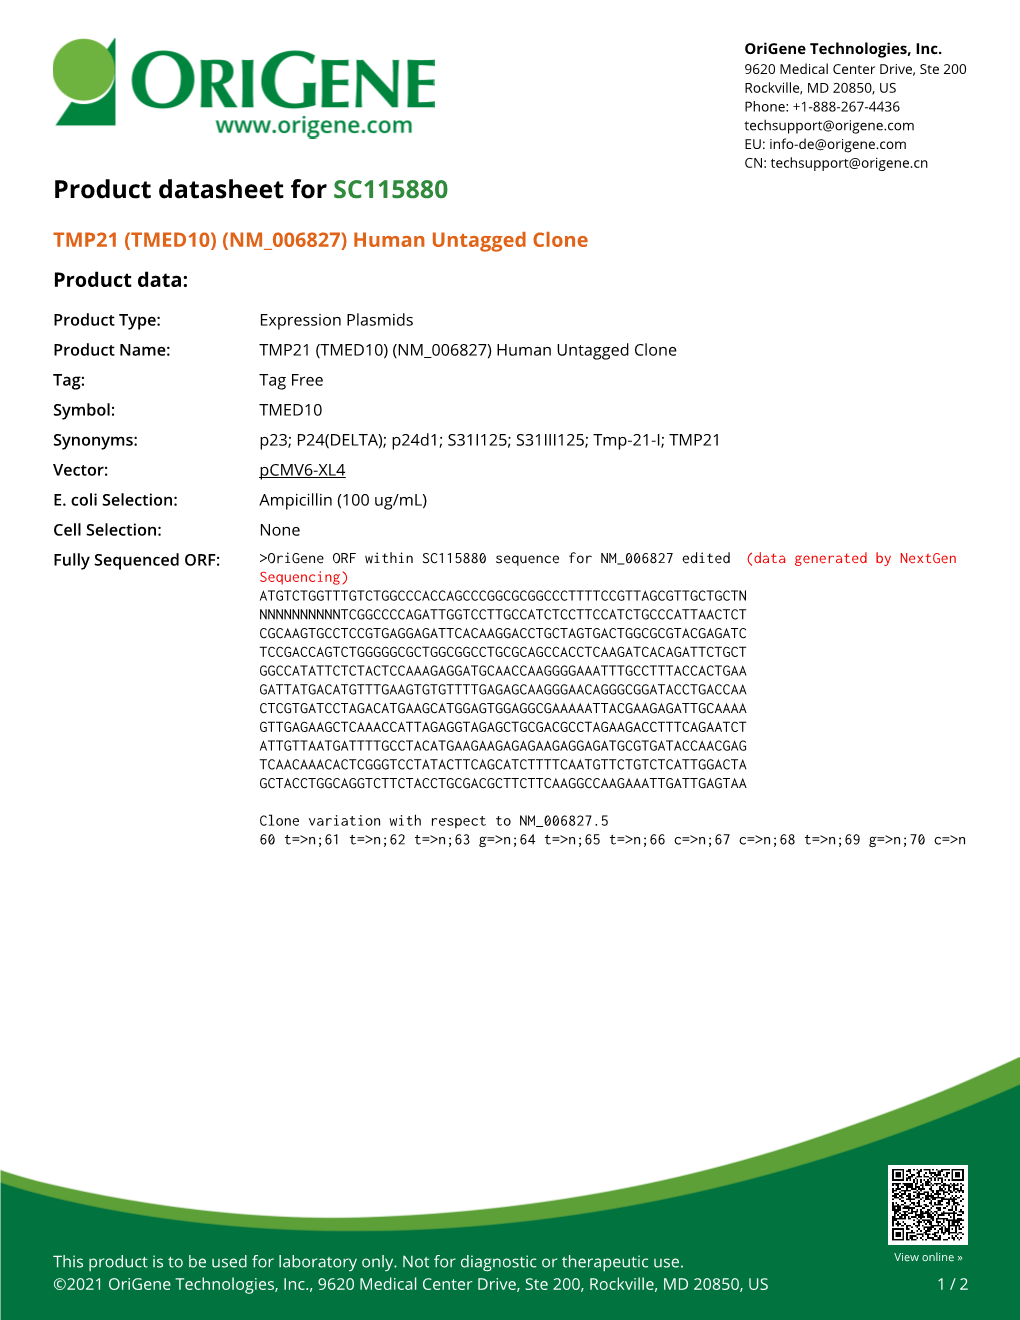 TMP21 (TMED10) (NM 006827) Human Untagged Clone Product Data